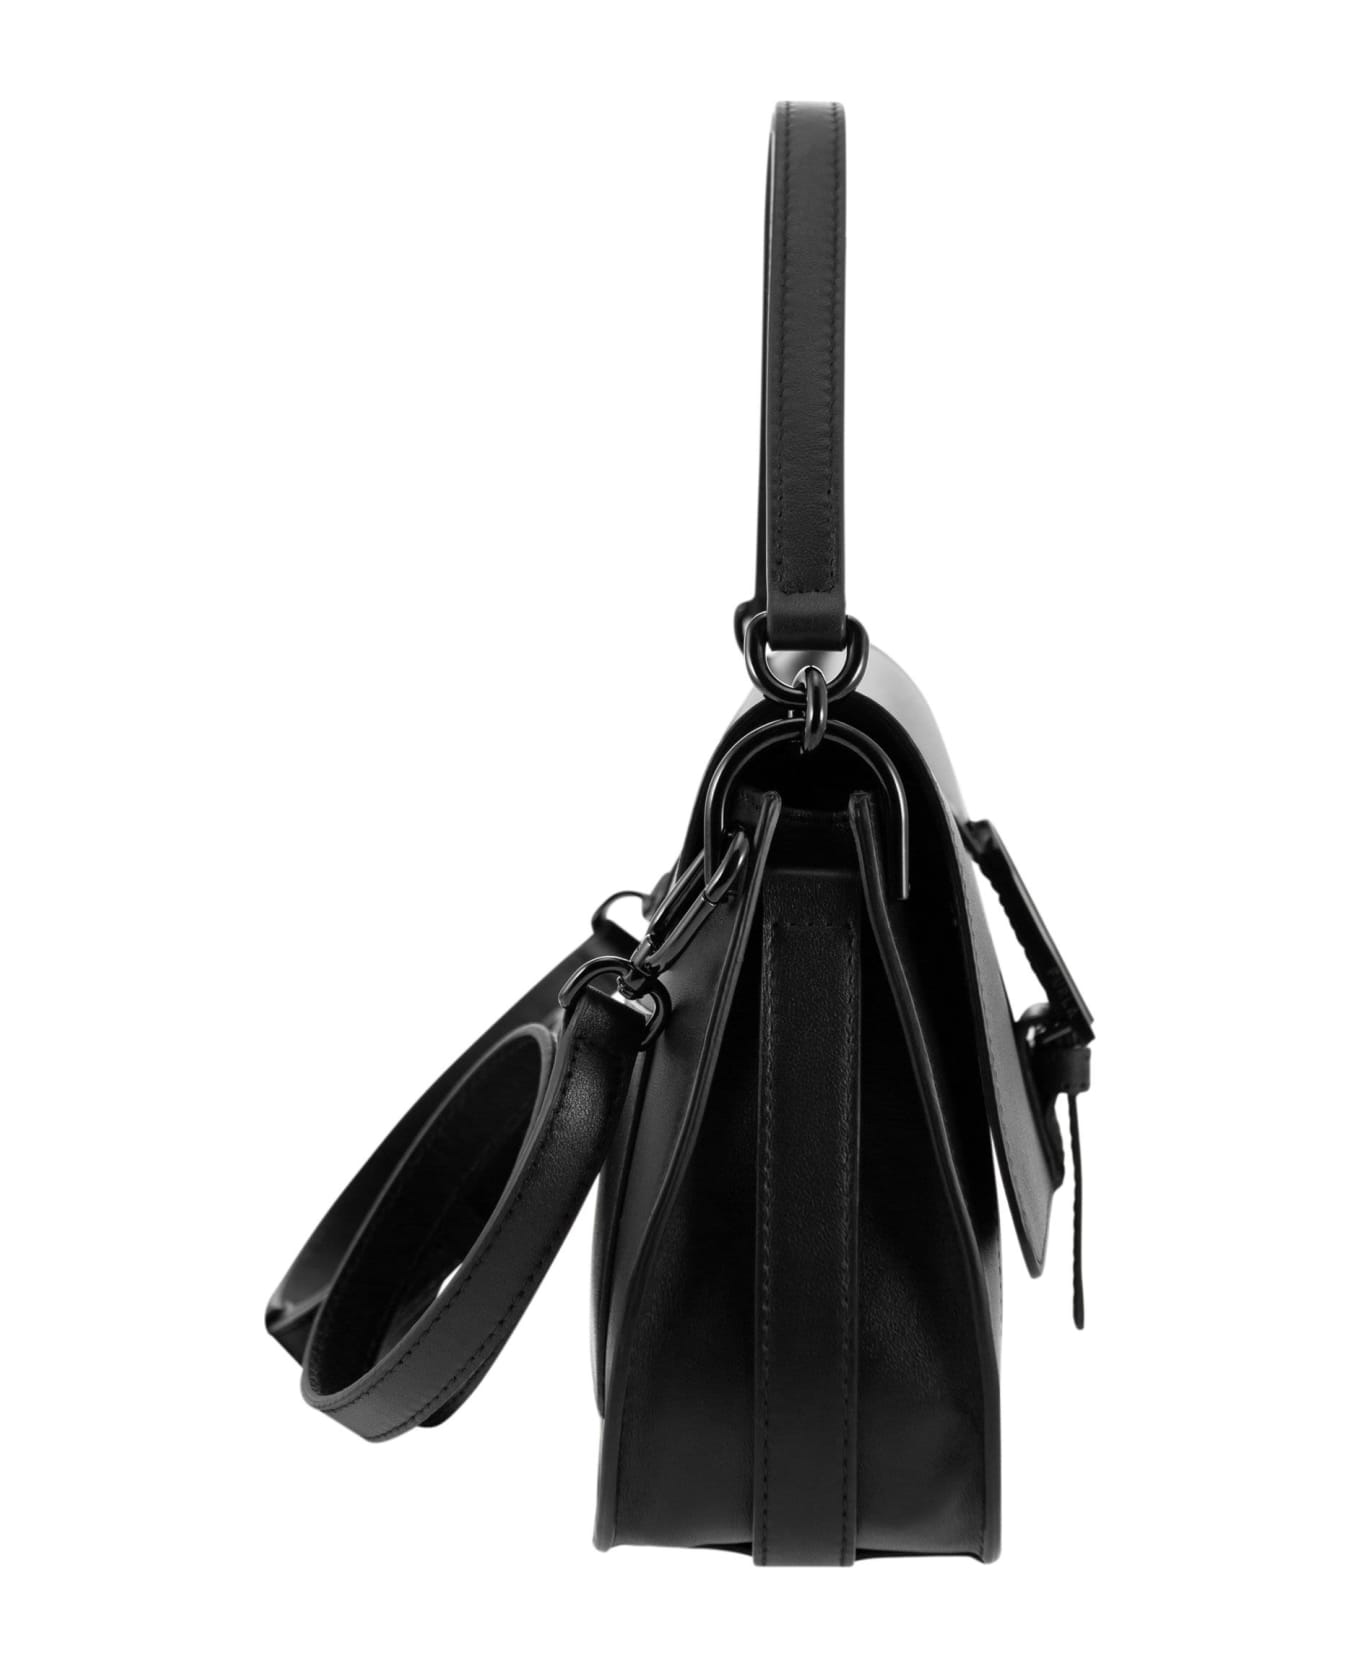 Furla Flow Handbag In Black Leather - Black